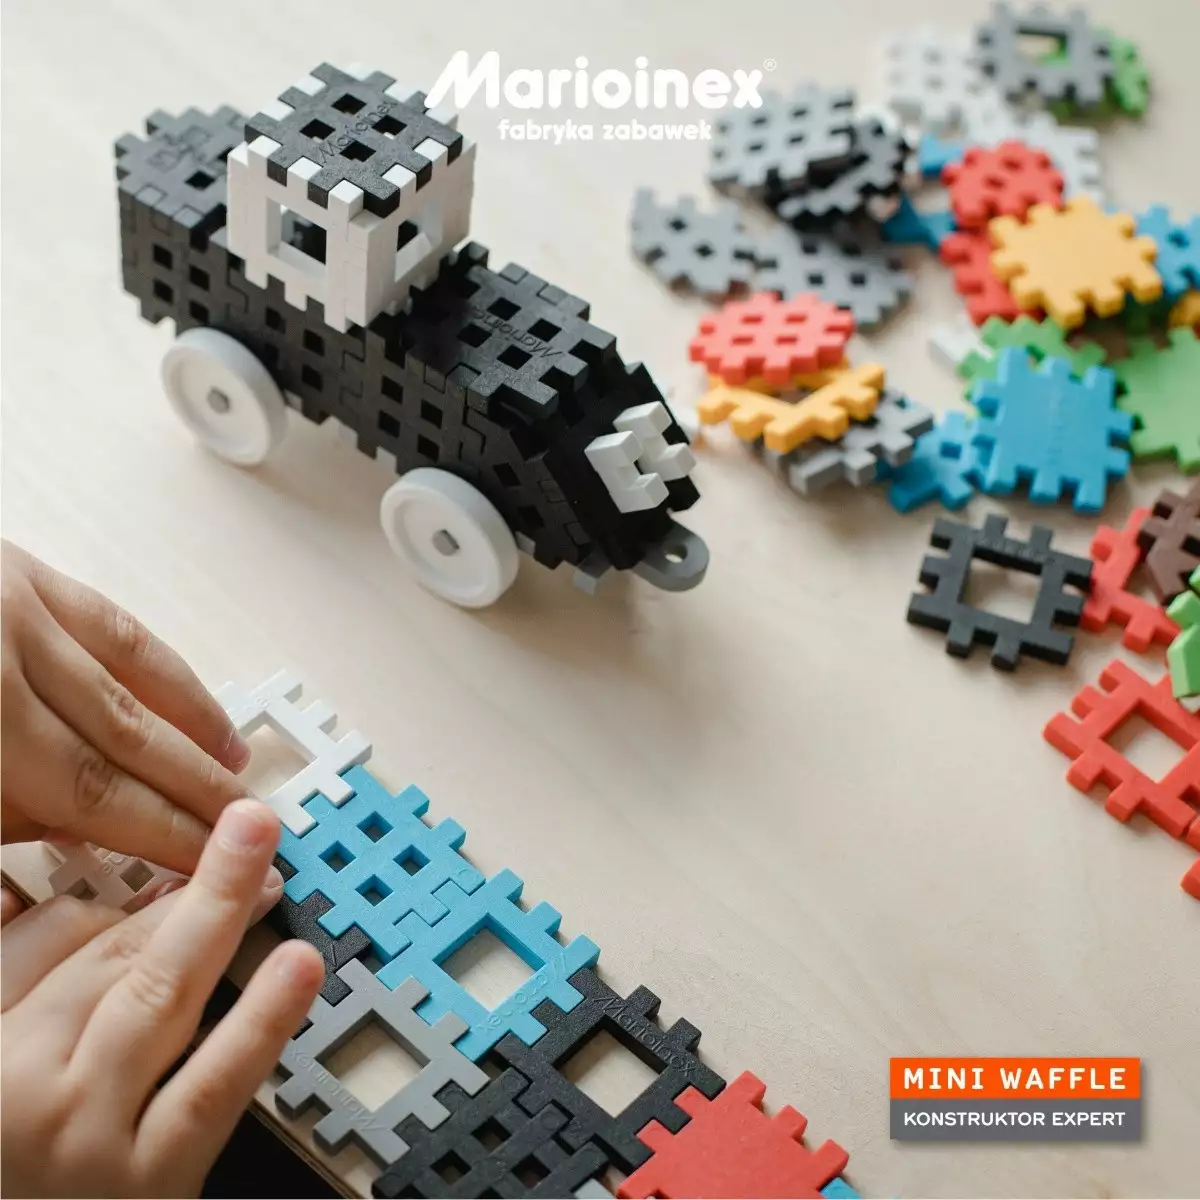 Marioinex Klocki Mini Waffle Konstruktor Expert 501 elementów